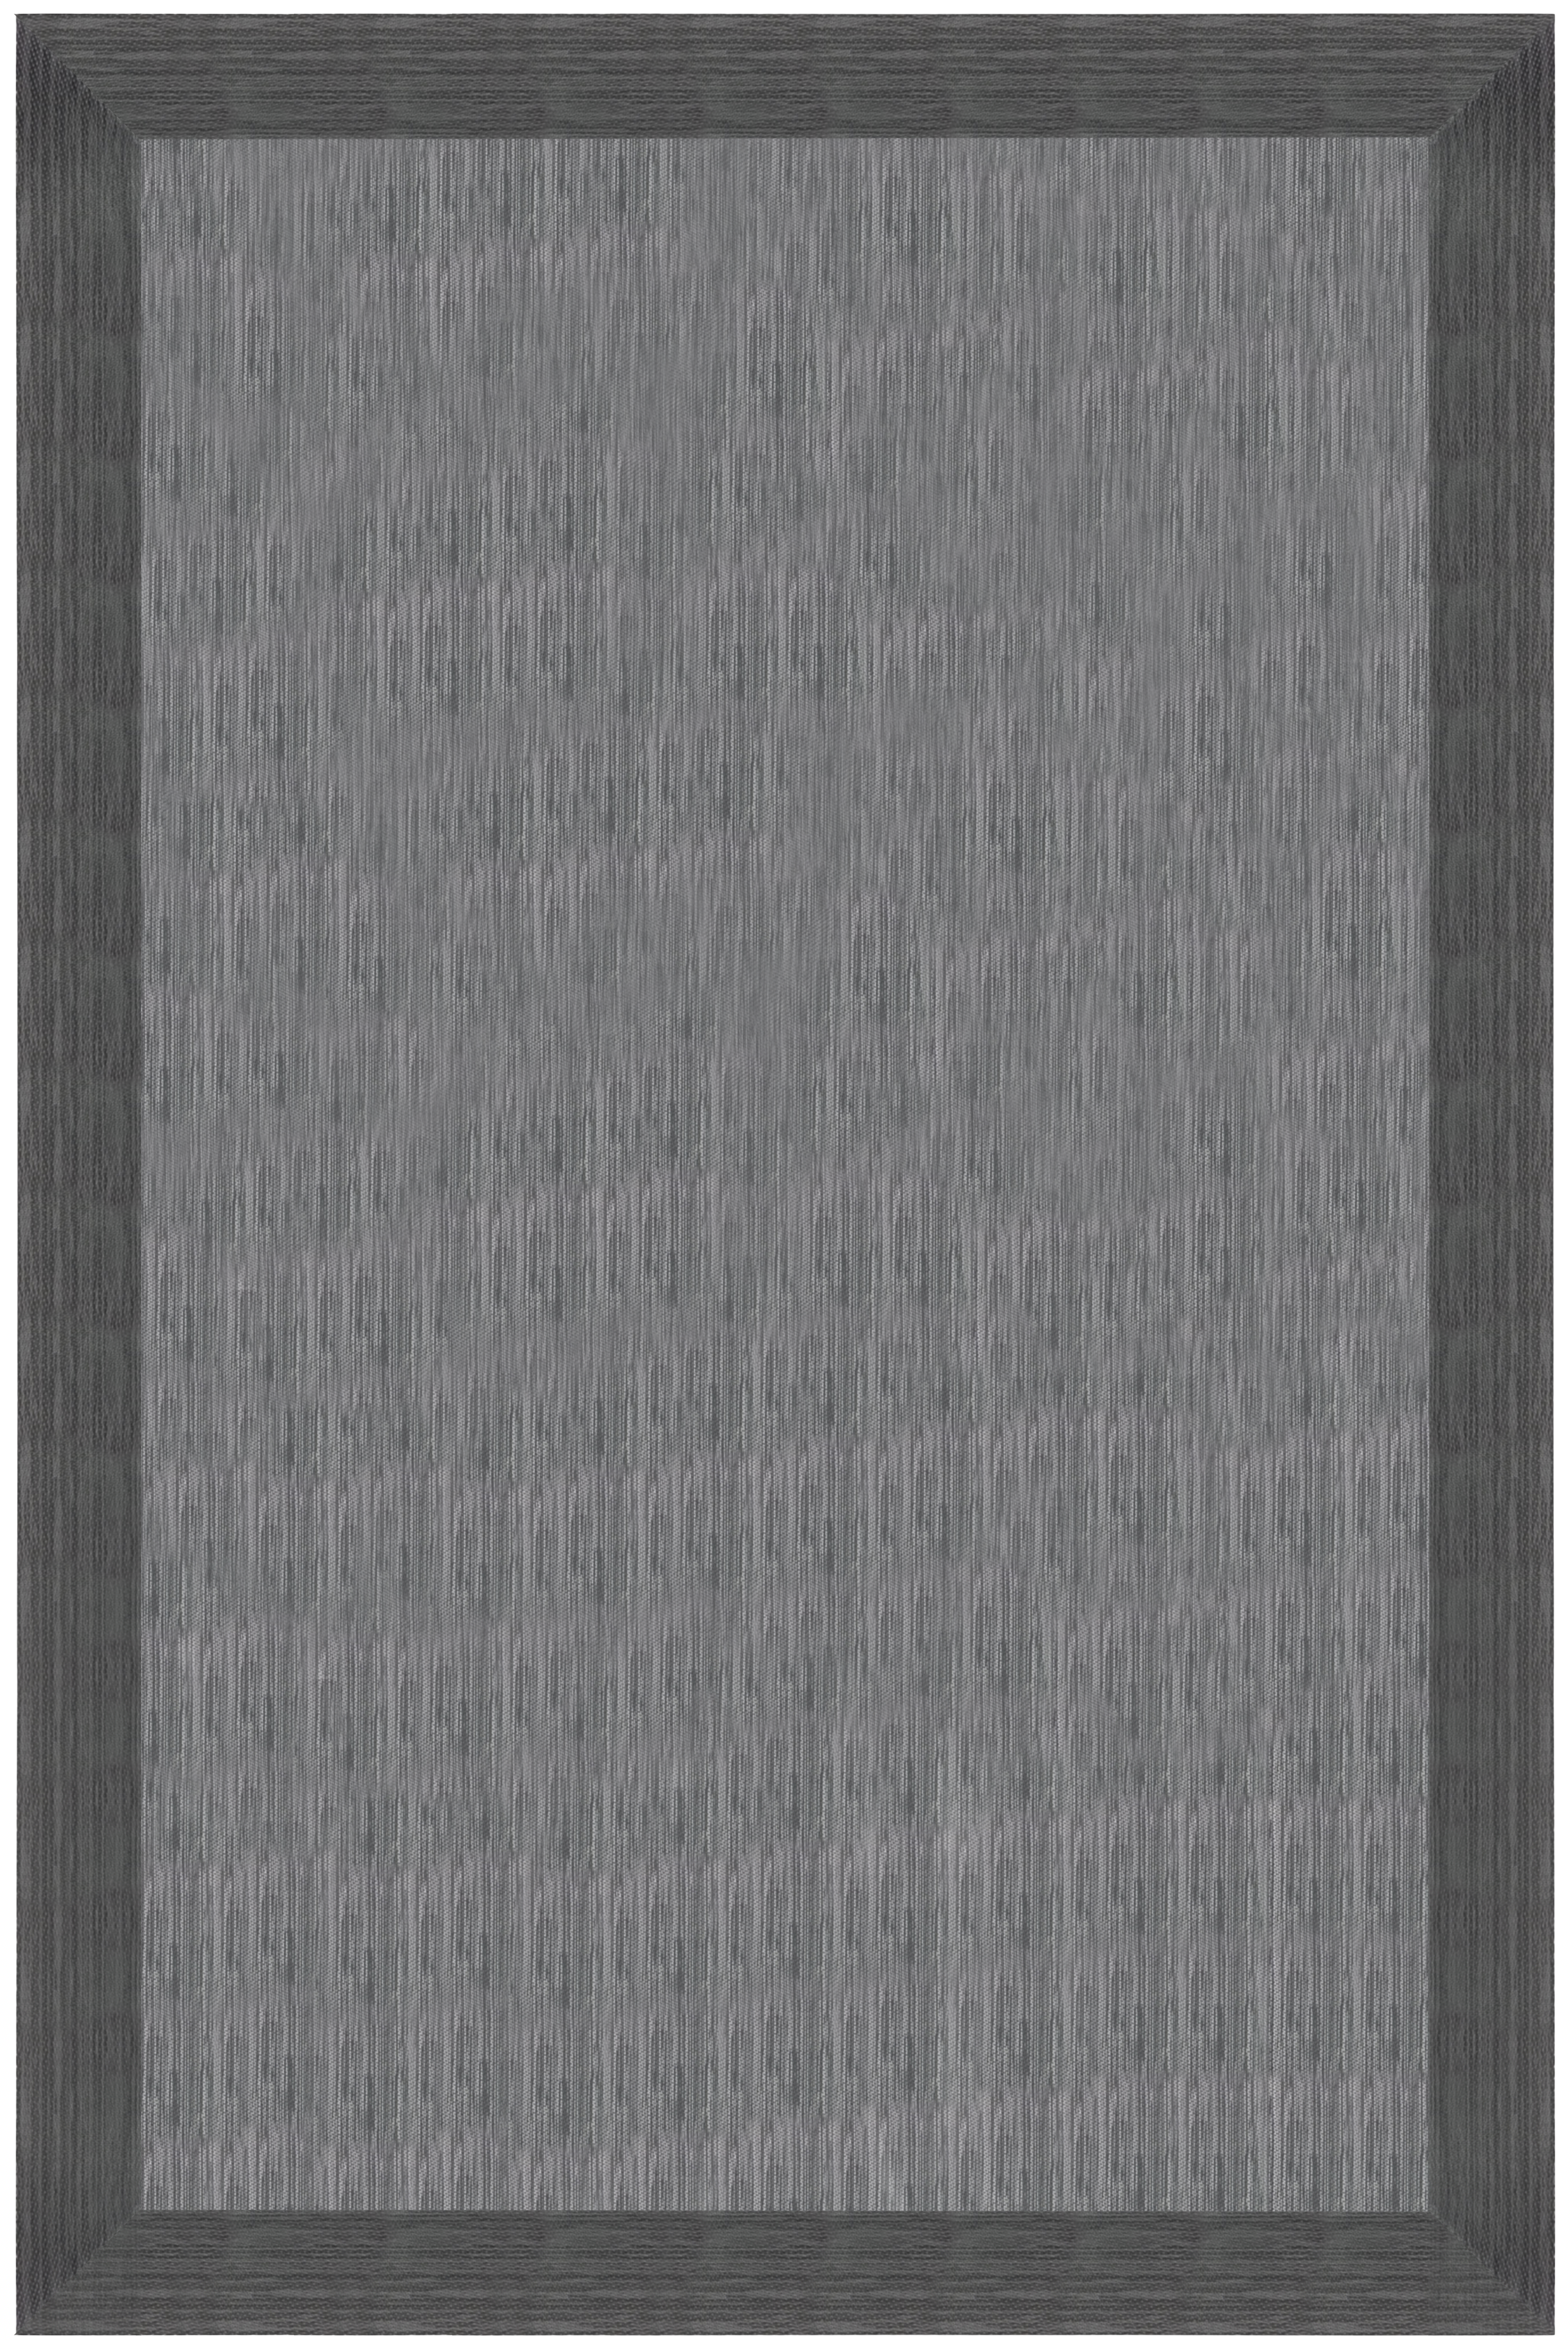 Alfombra exterior/interior pvc teplon ++ archi gris plata 140x200cm de la marca TEMYPLAST